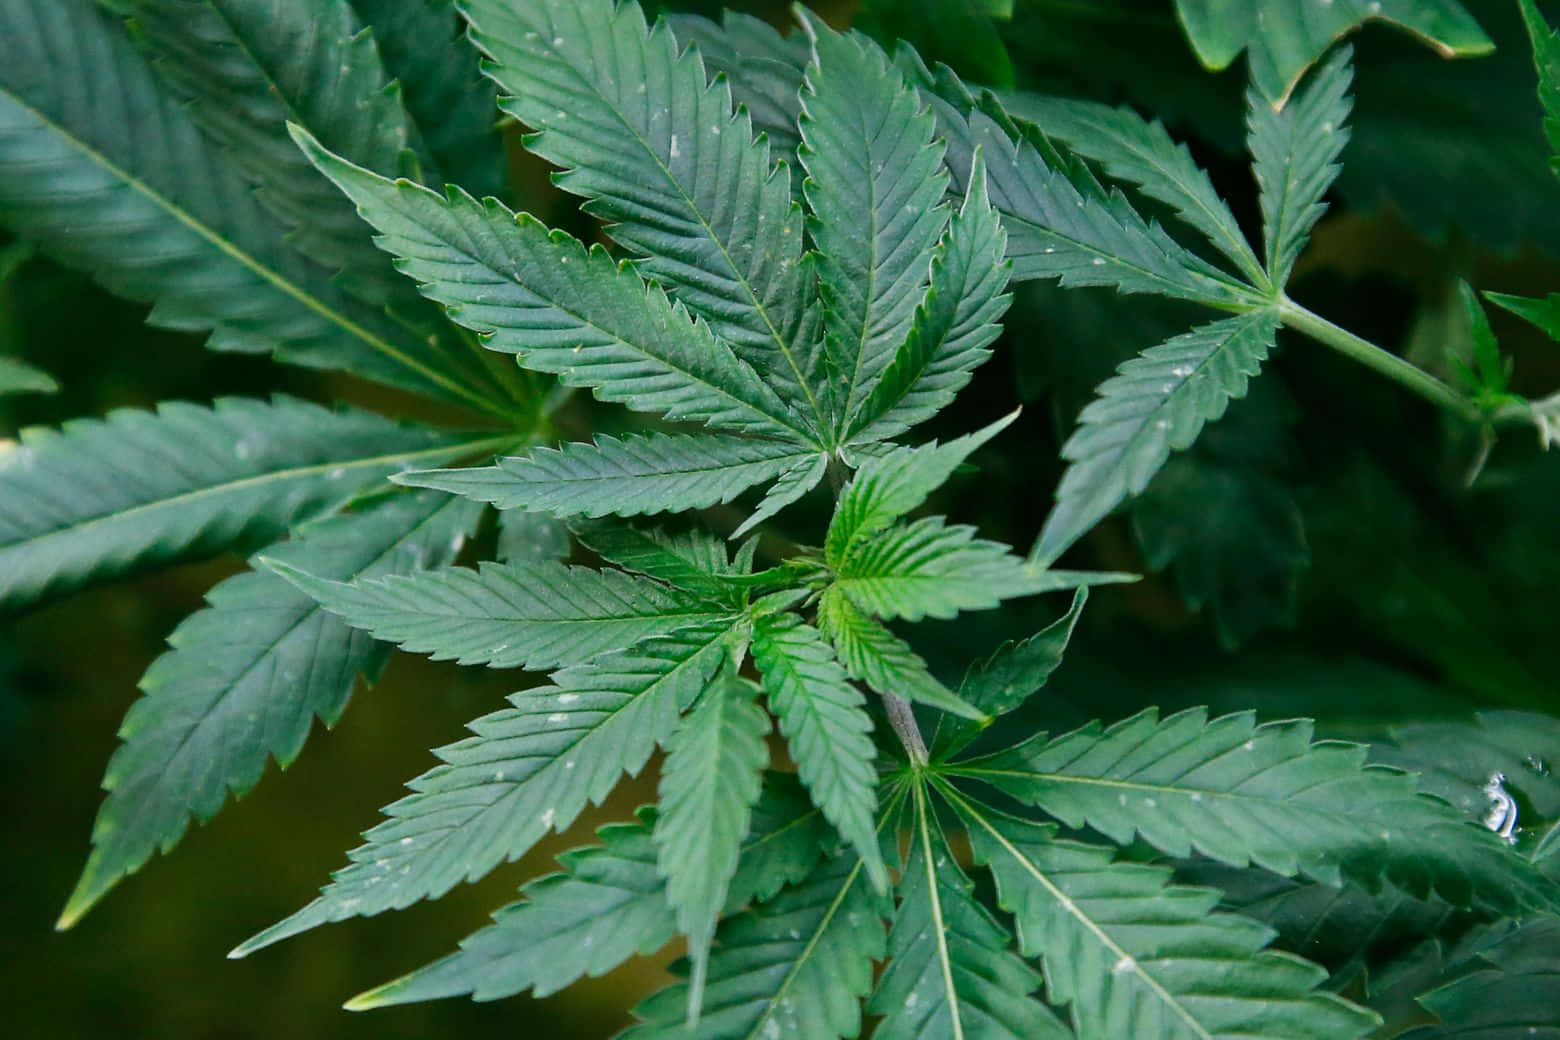 Vibrant Green Marijuana Plant in Natural Setting